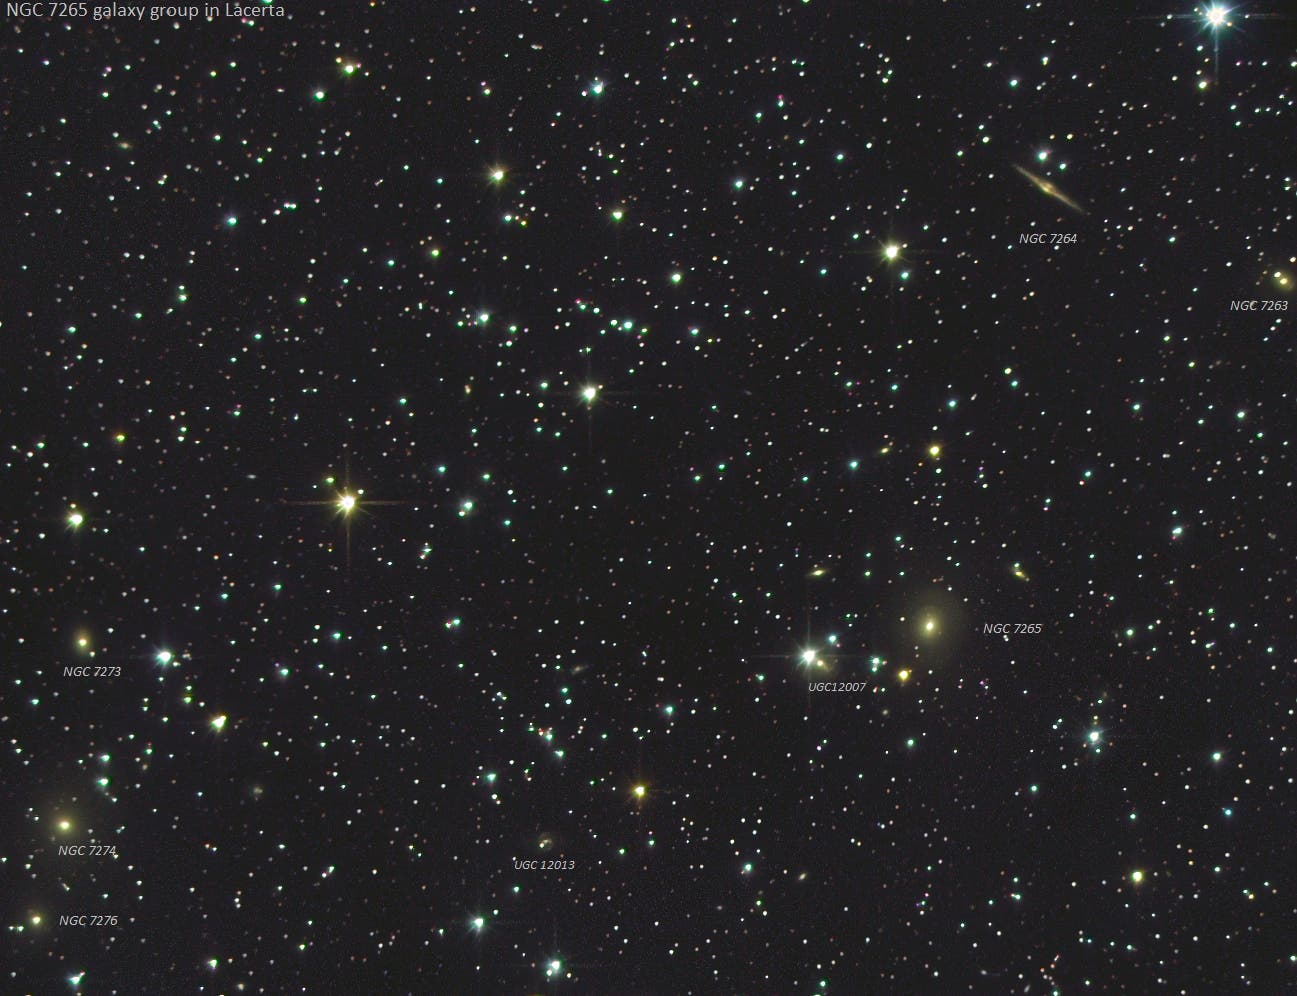 NGC 7265-Galaxiengruppe (Identifikationen)